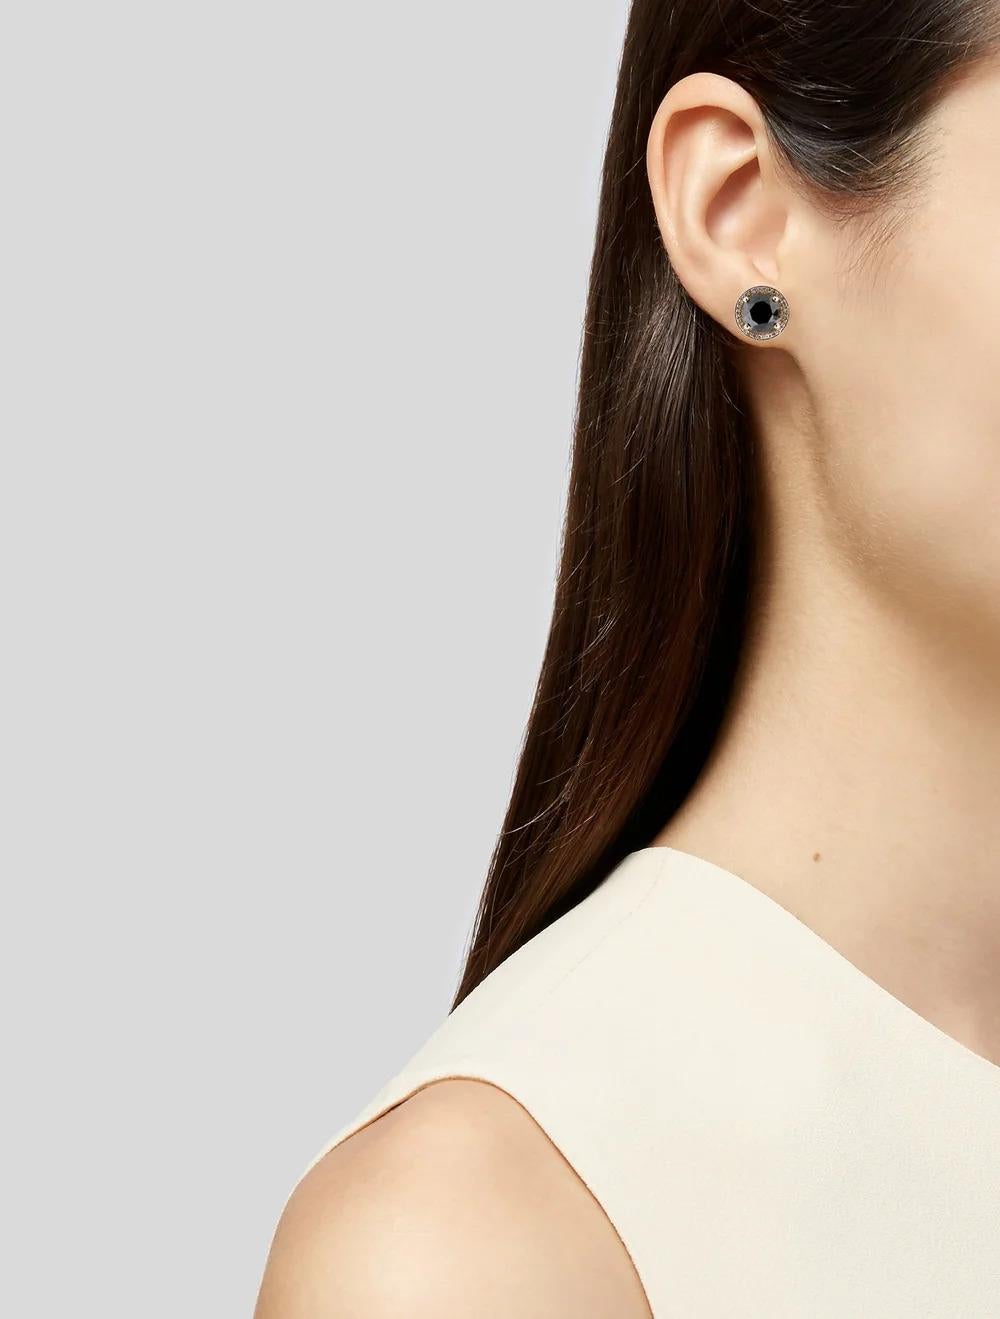 Round Cut 14K Diamond Stud Earrings 5.48ctw - Timeless & Elegant Statement Jewelry For Sale